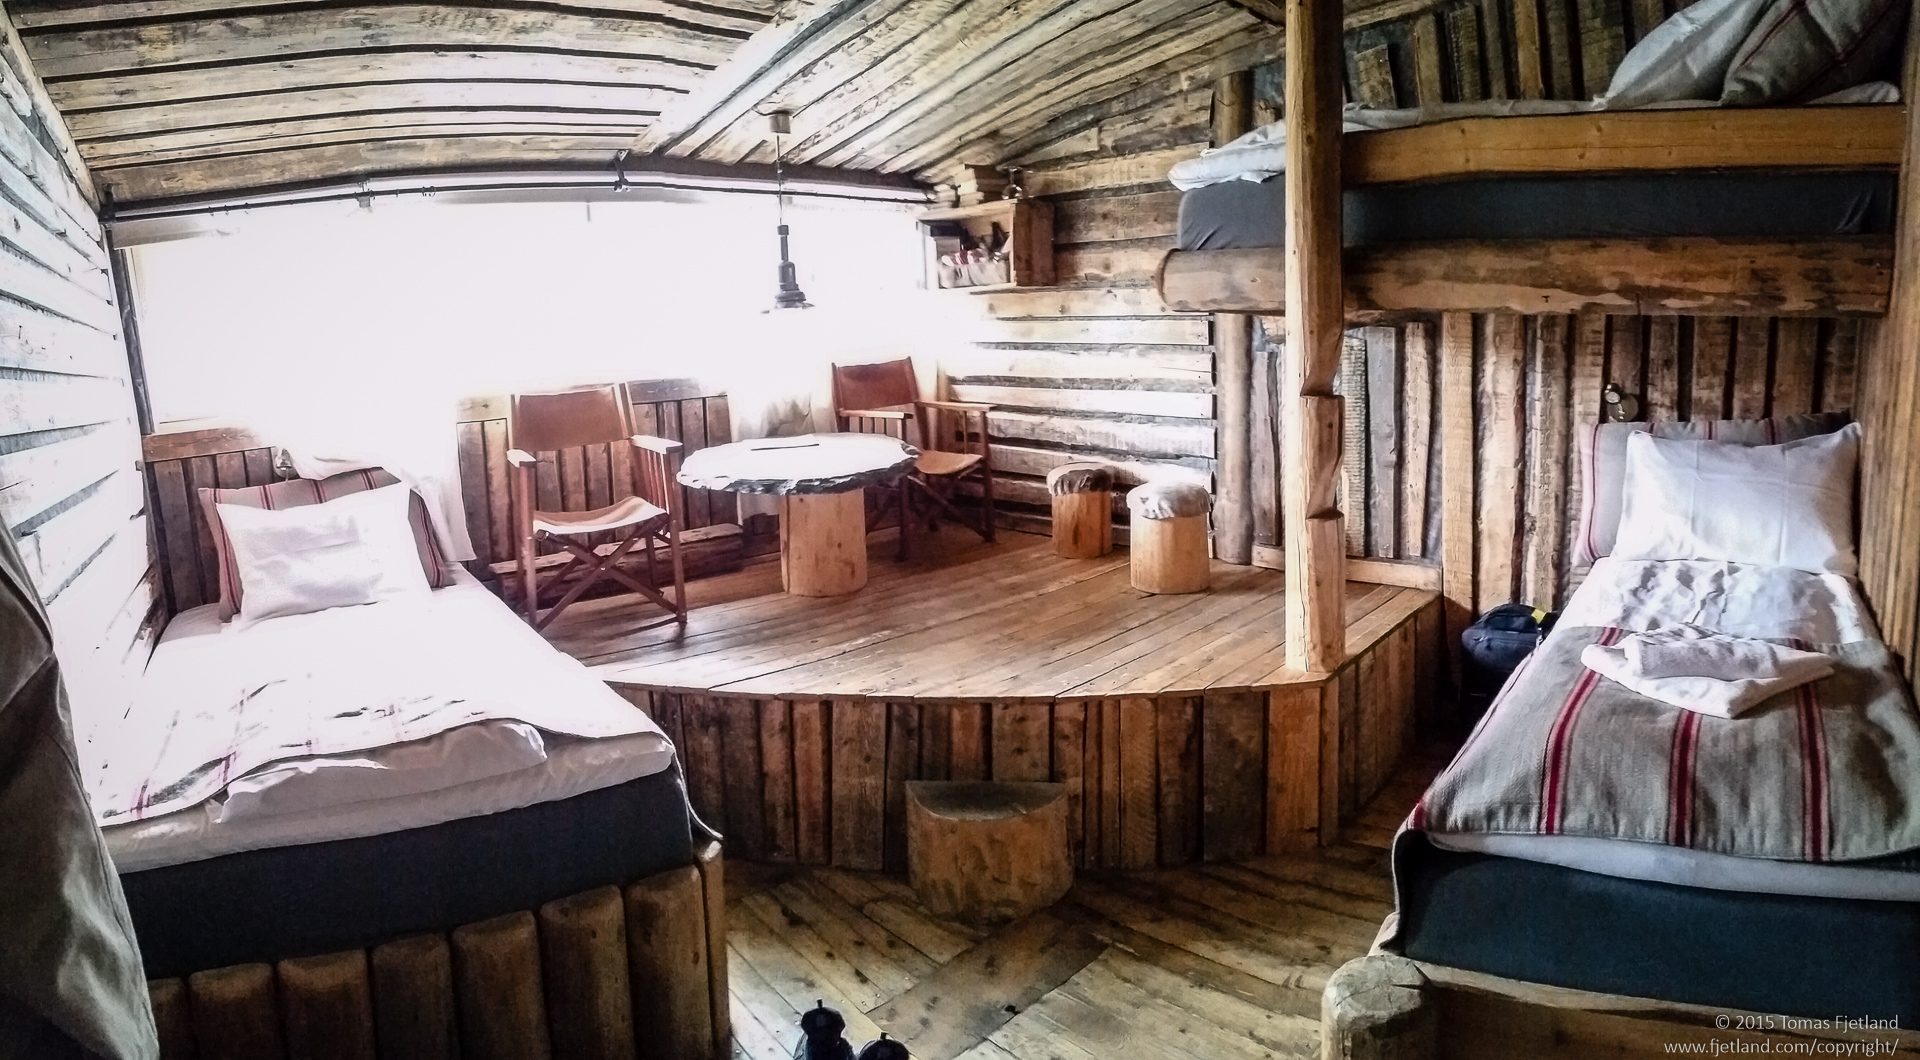 My room (room 6) at the Basecamp Spitsbergen hotel